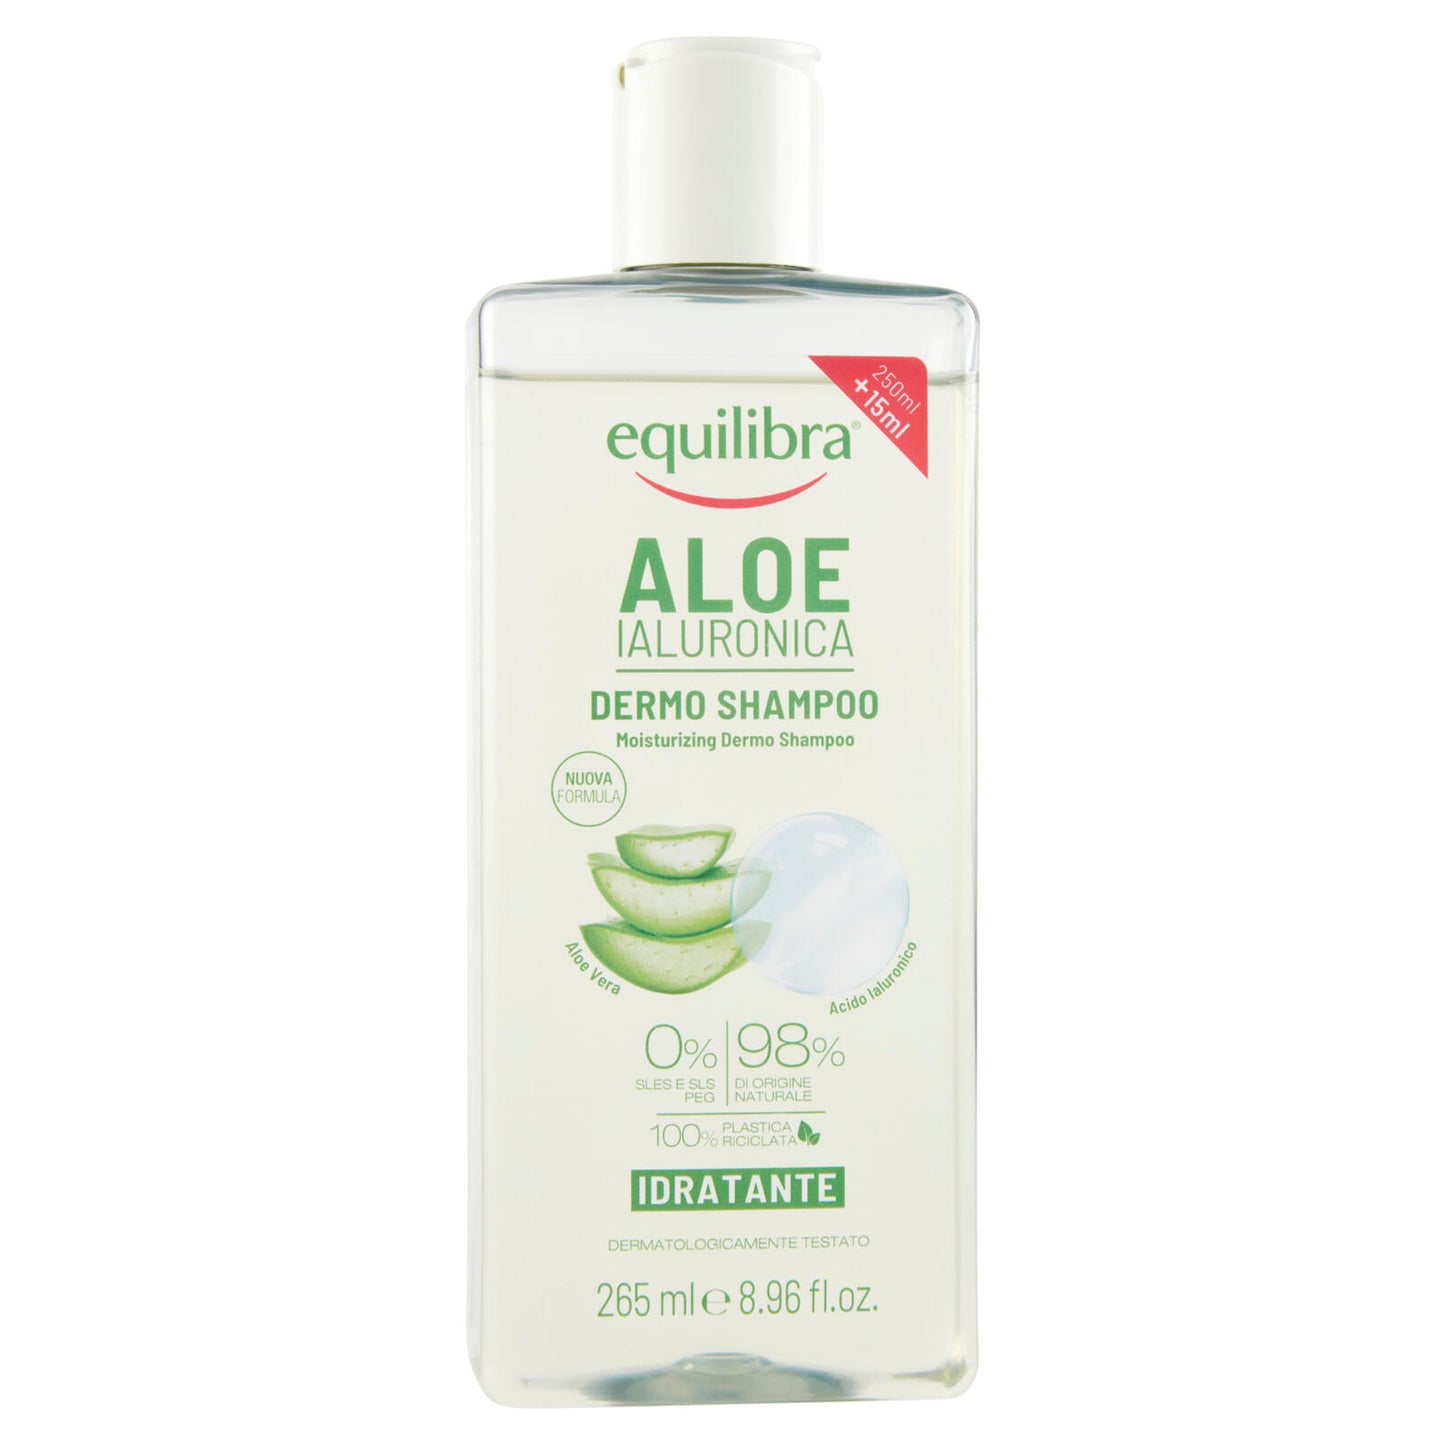 equilibra Aloe Ialuronica Dermo Shampoo Idratante 265 ml